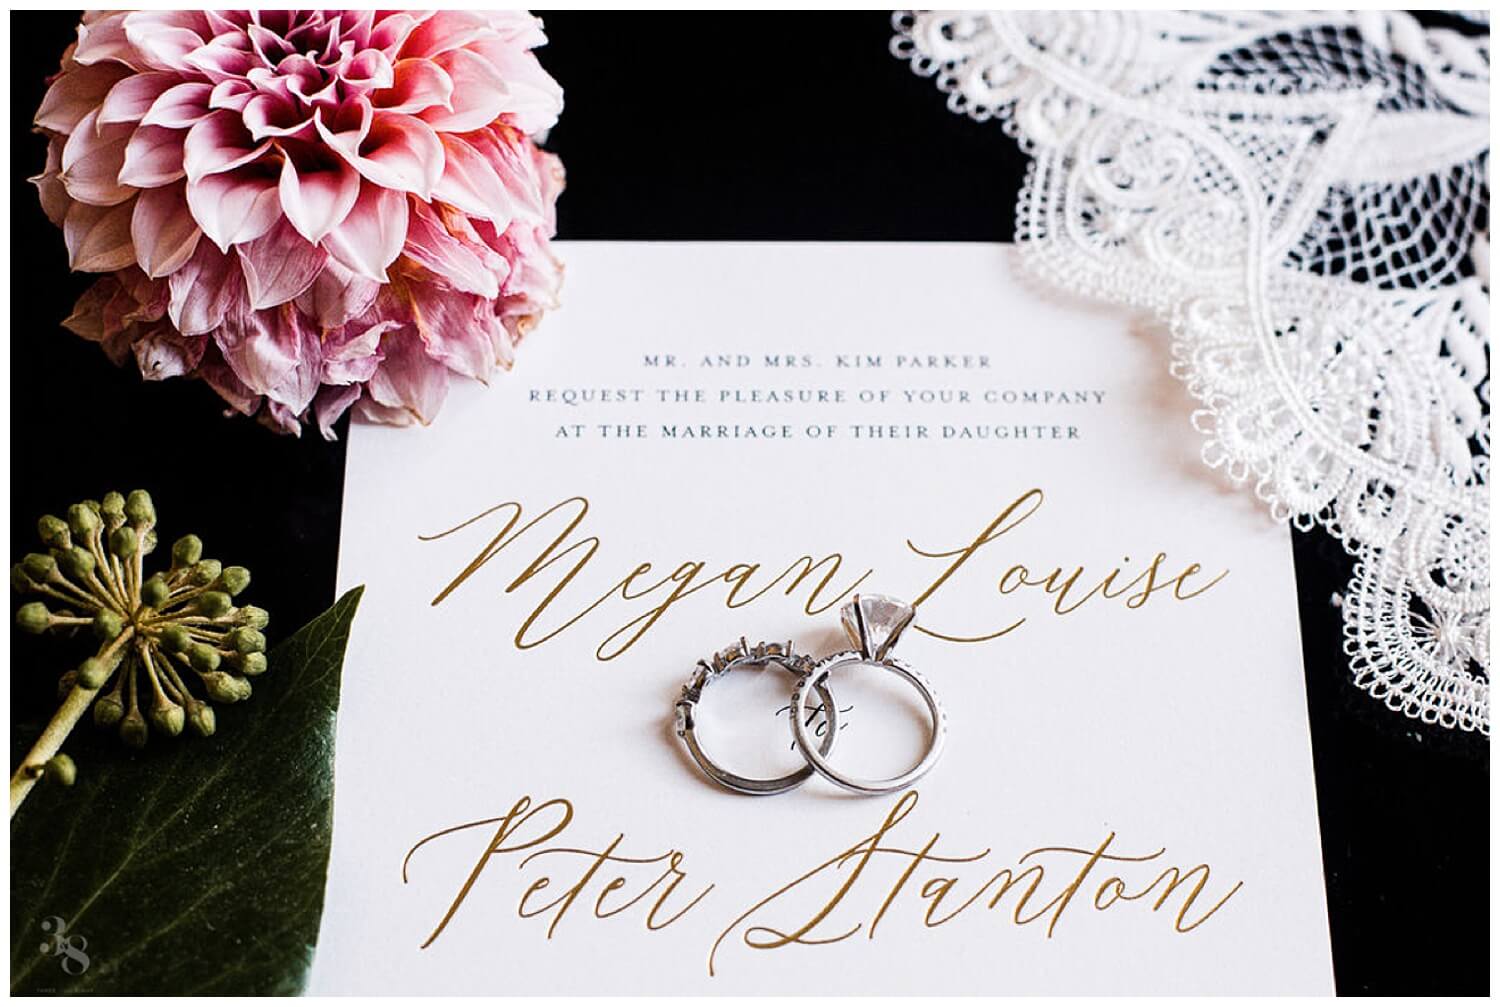 Cleveland Wedding Invitations by brittney nichole designs